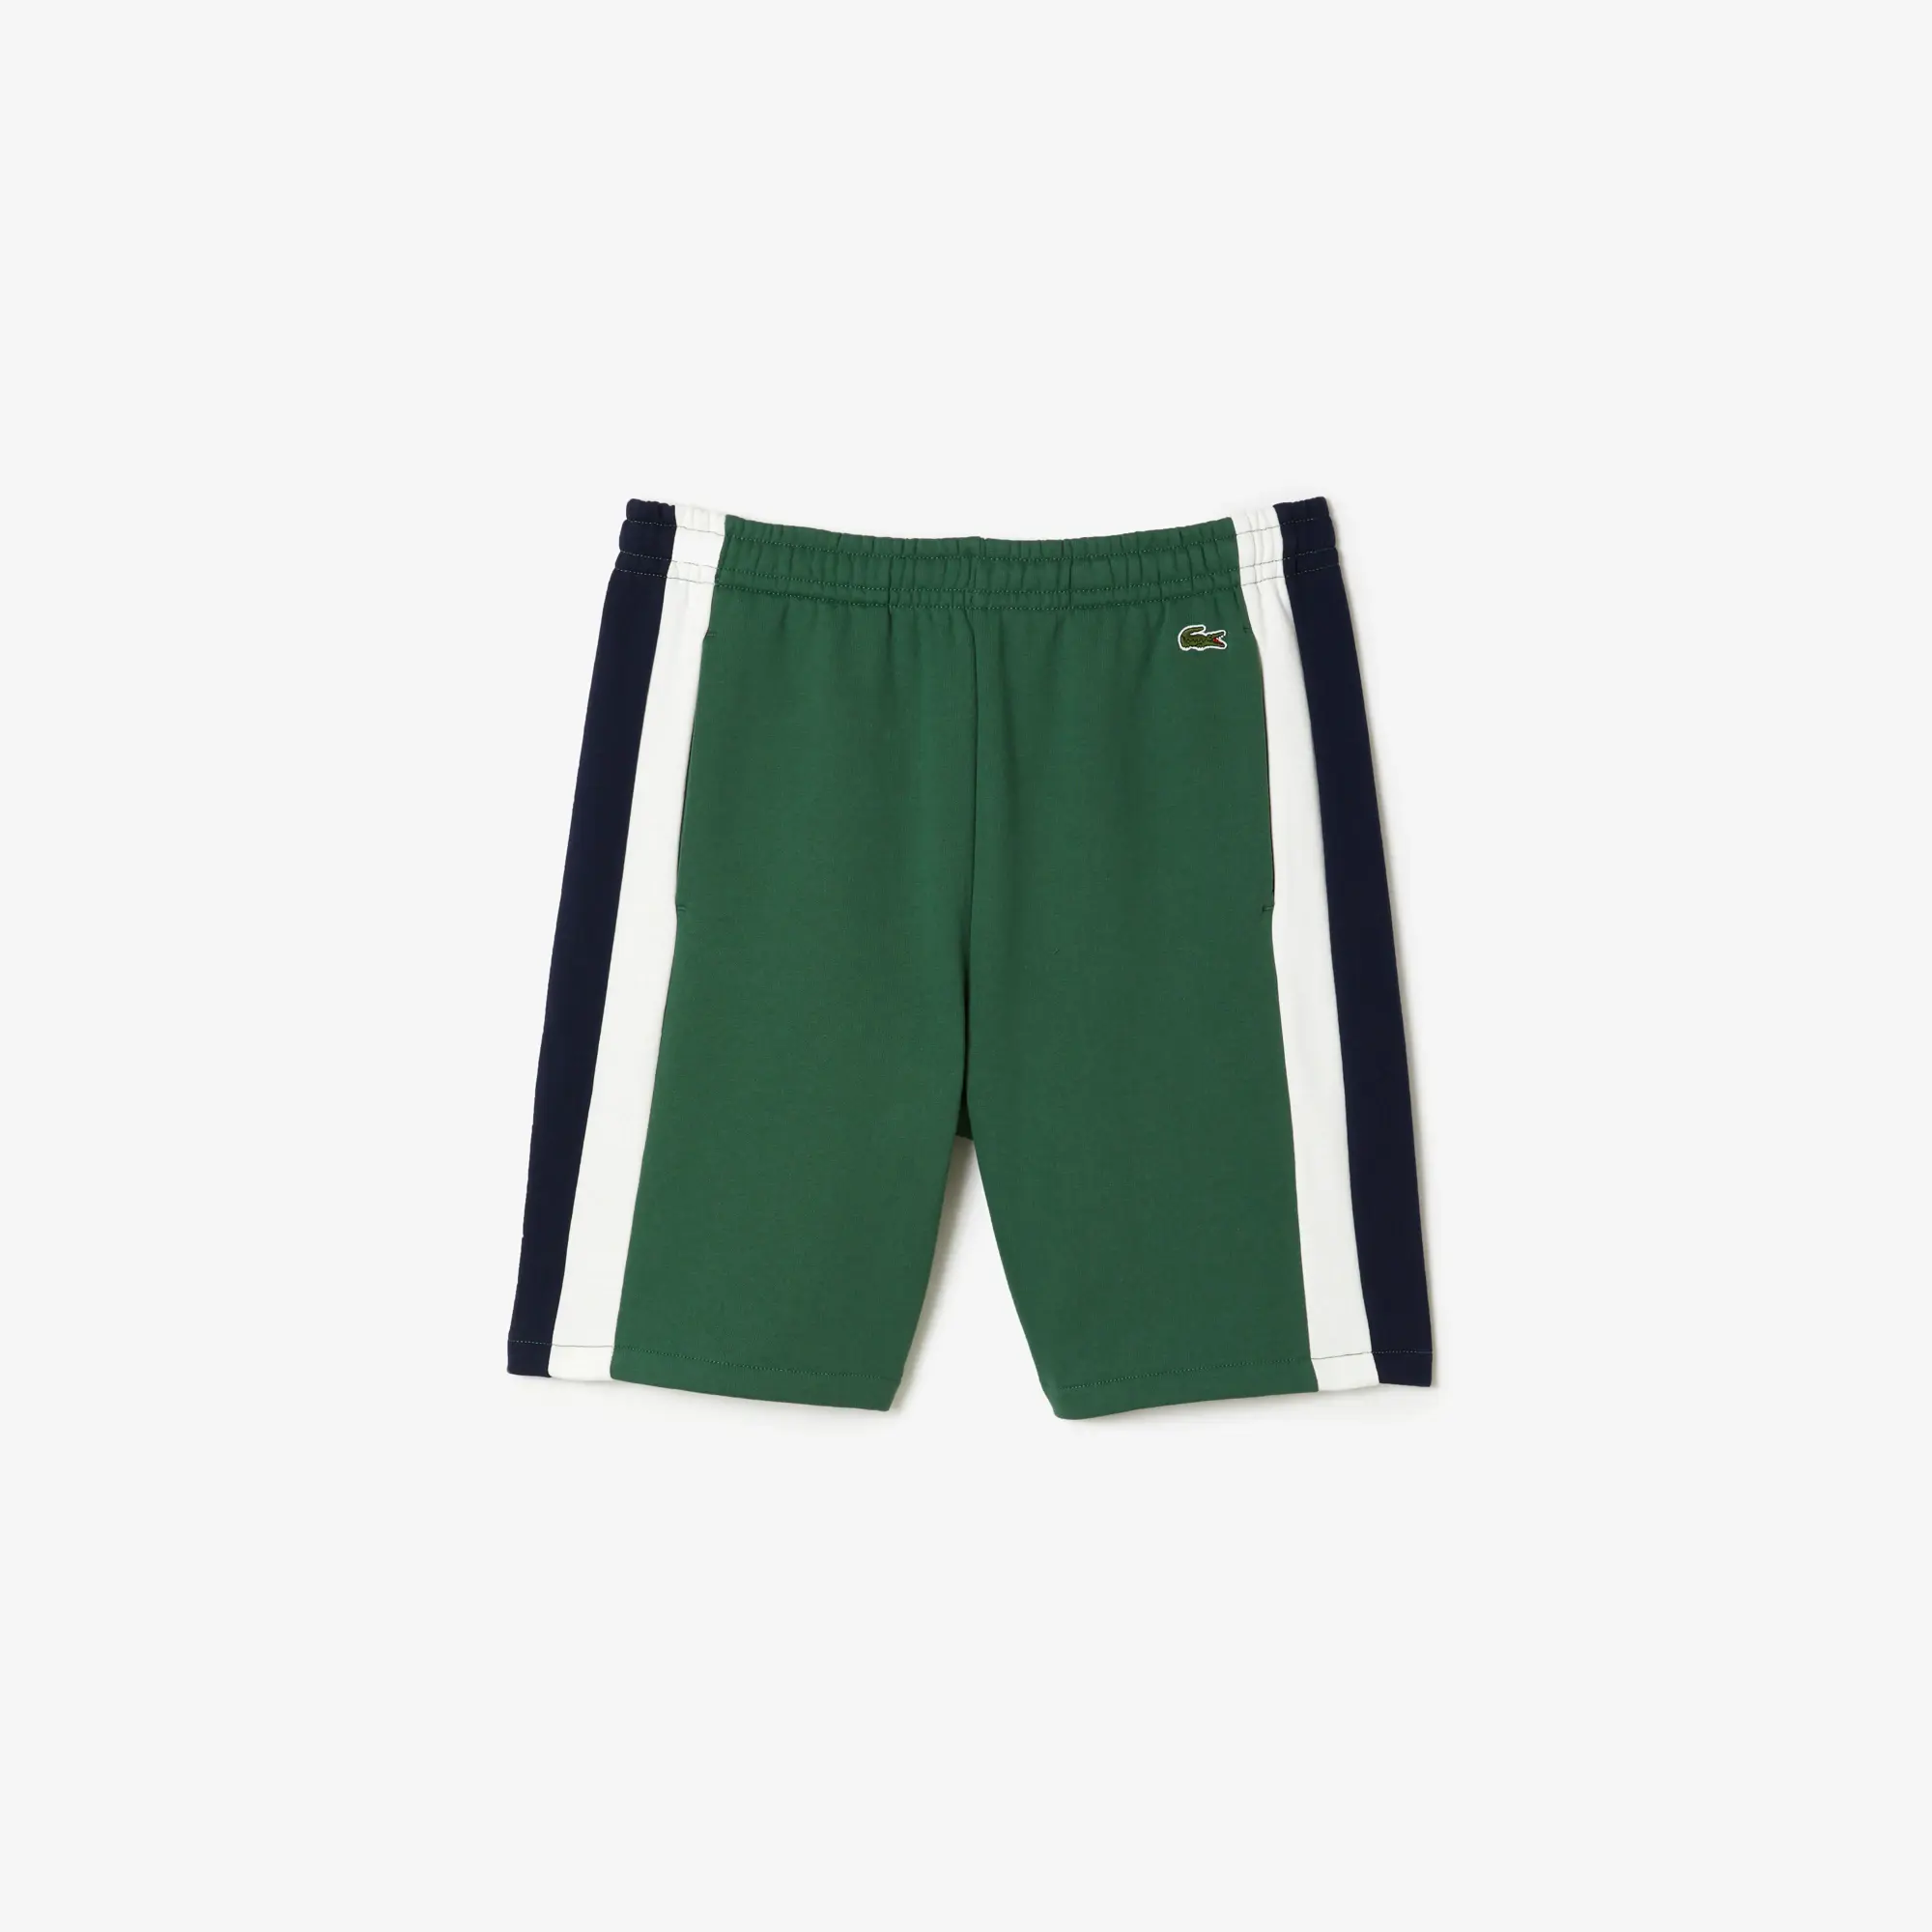 Lacoste Men’s Brushed Fleece Colorblock Shorts. 2